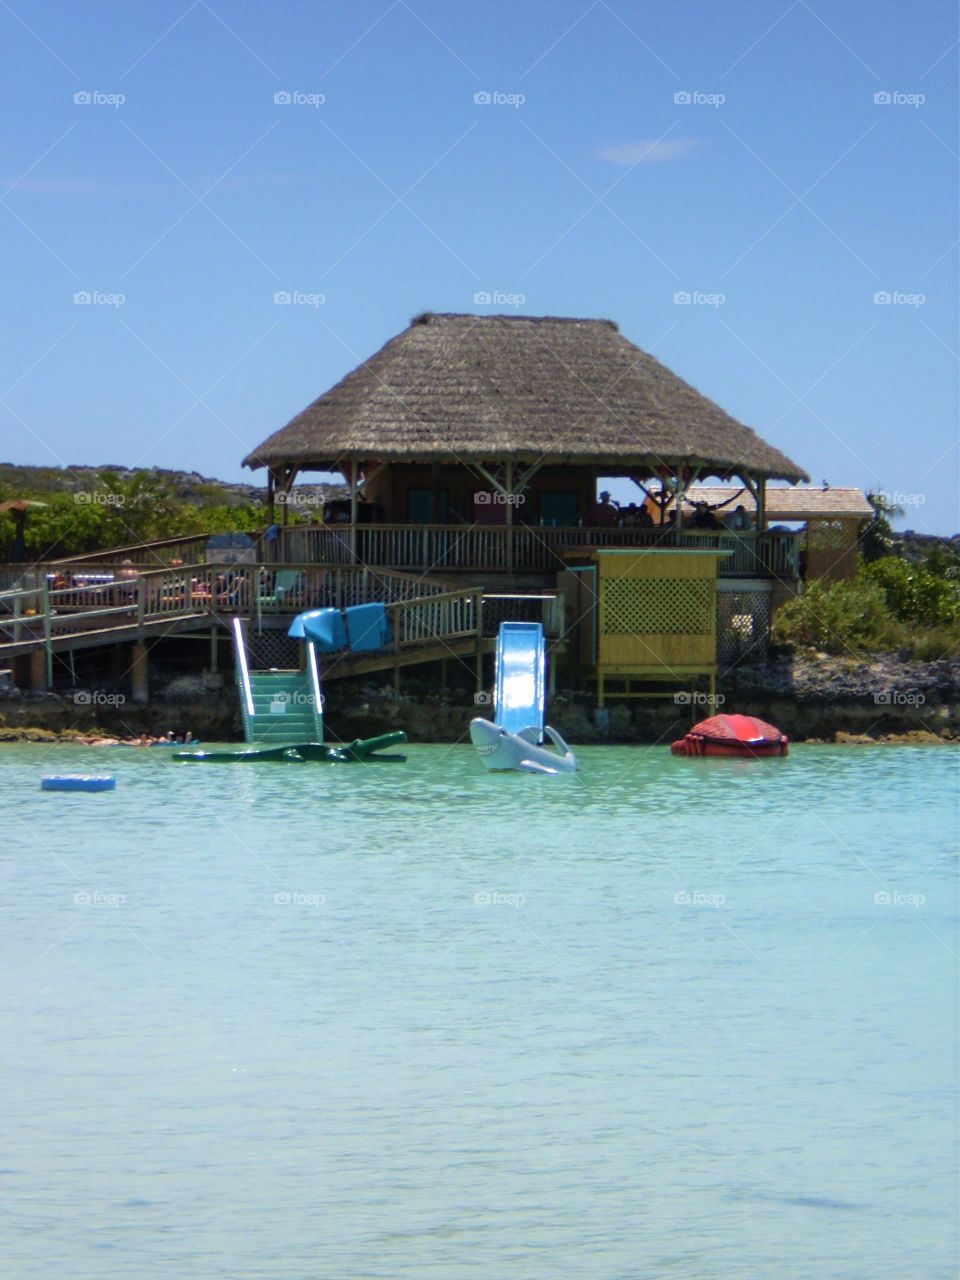 Beach hut & water fun in Labadee, Haiti